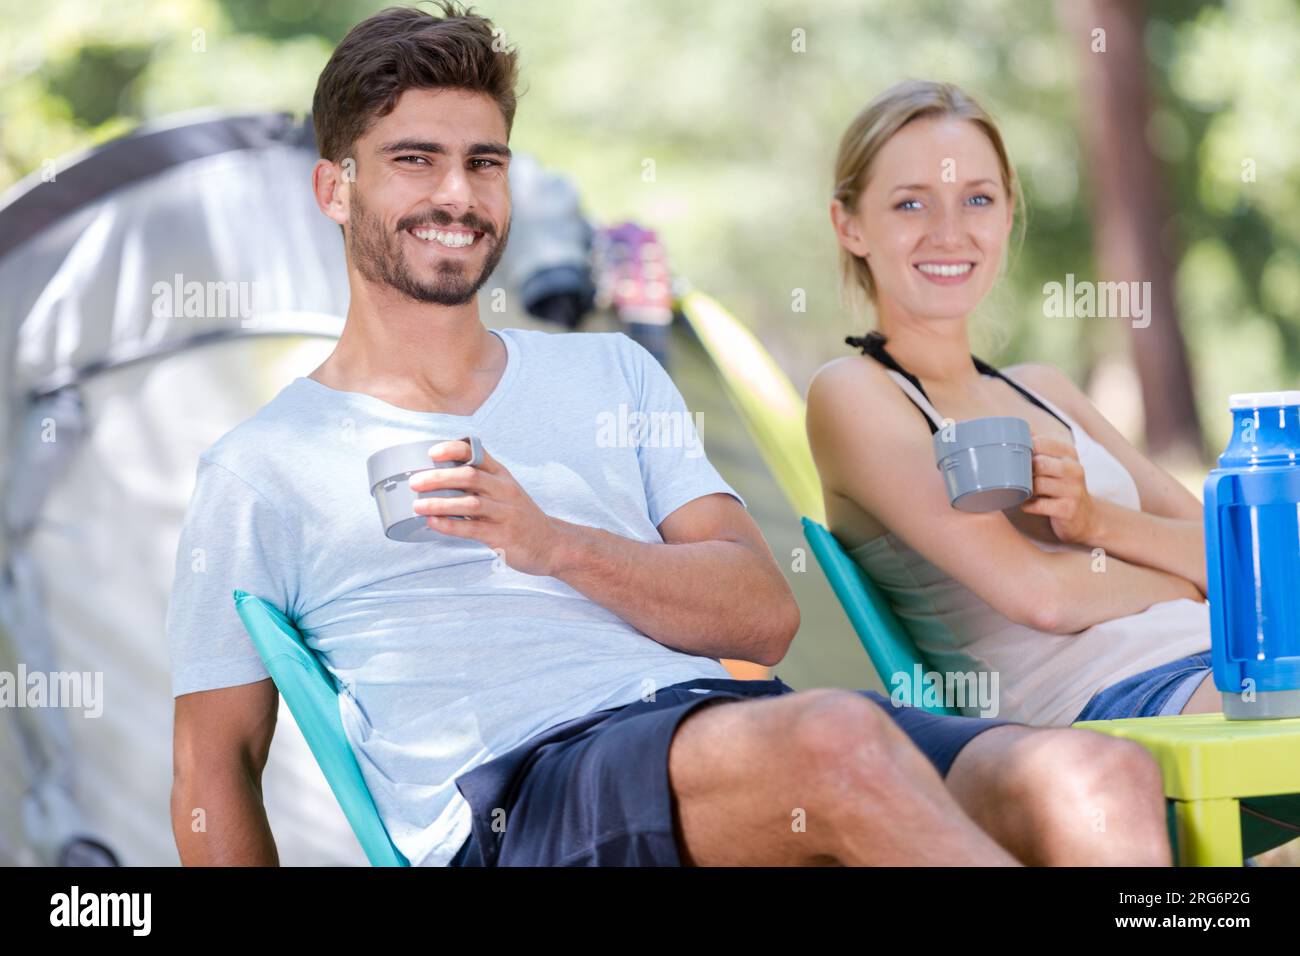 https://c8.alamy.com/comp/2RG6P2G/loving-couple-havin-tea-outdoors-2RG6P2G.jpg